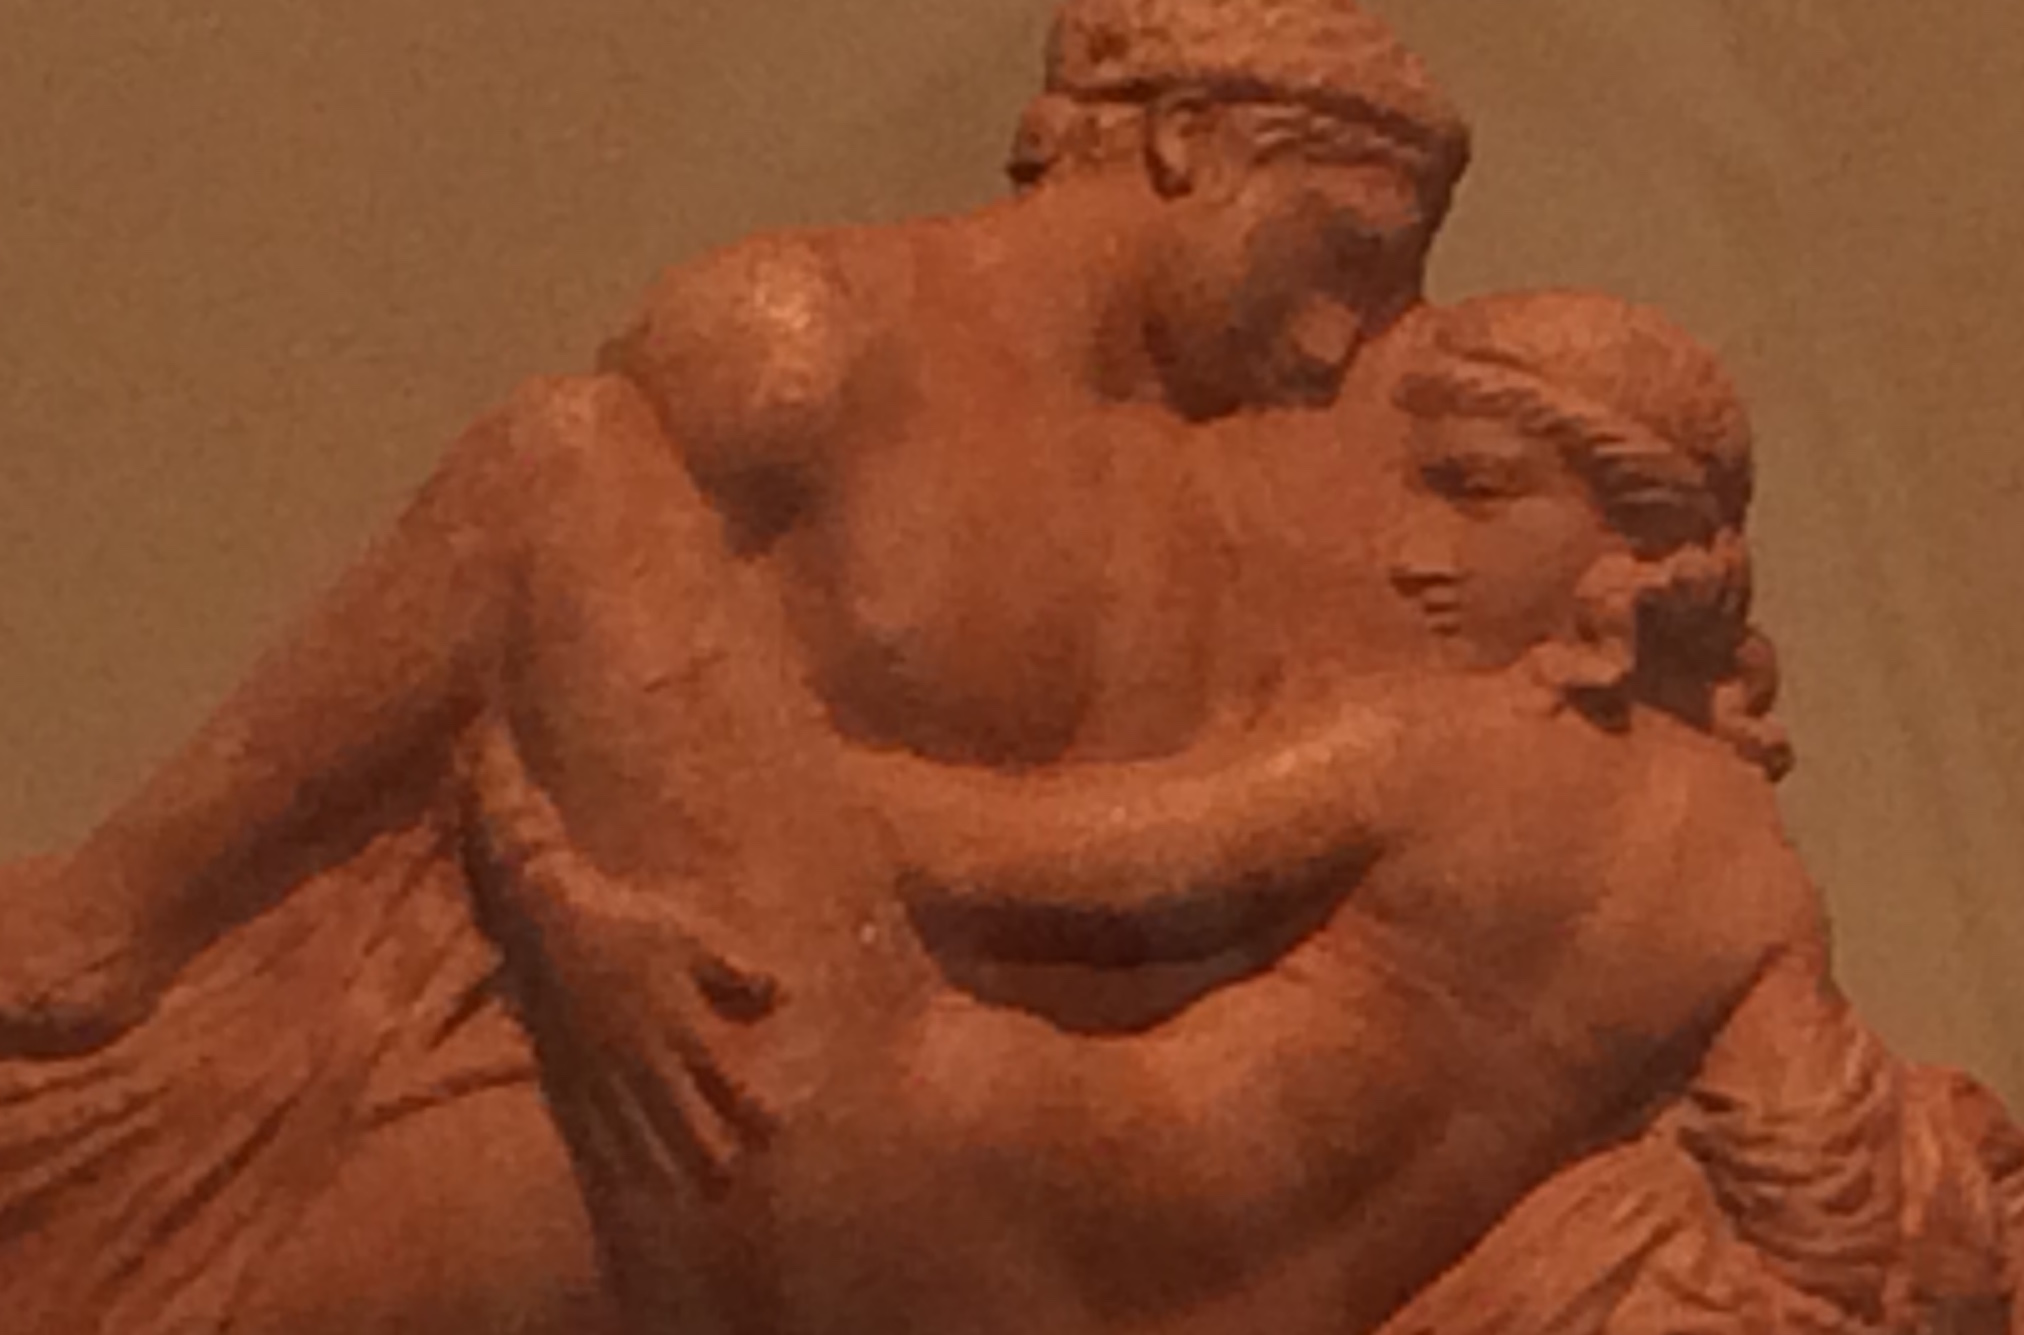 Altes Museum, Berlin, sculpture, naked, couple, man, woman, sex, face, stone, art